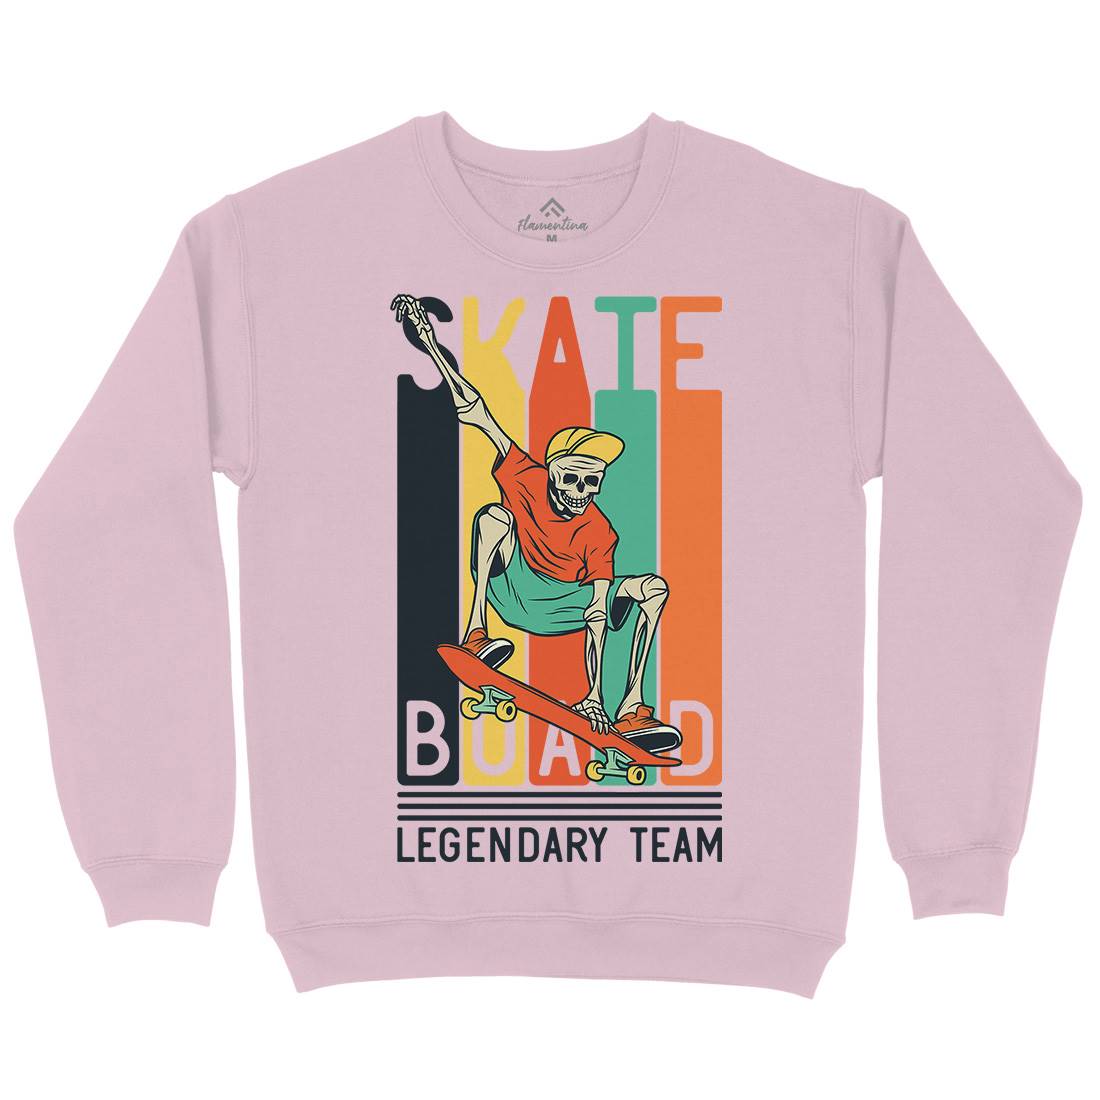 Legendary Team Kids Crew Neck Sweatshirt Skate D952